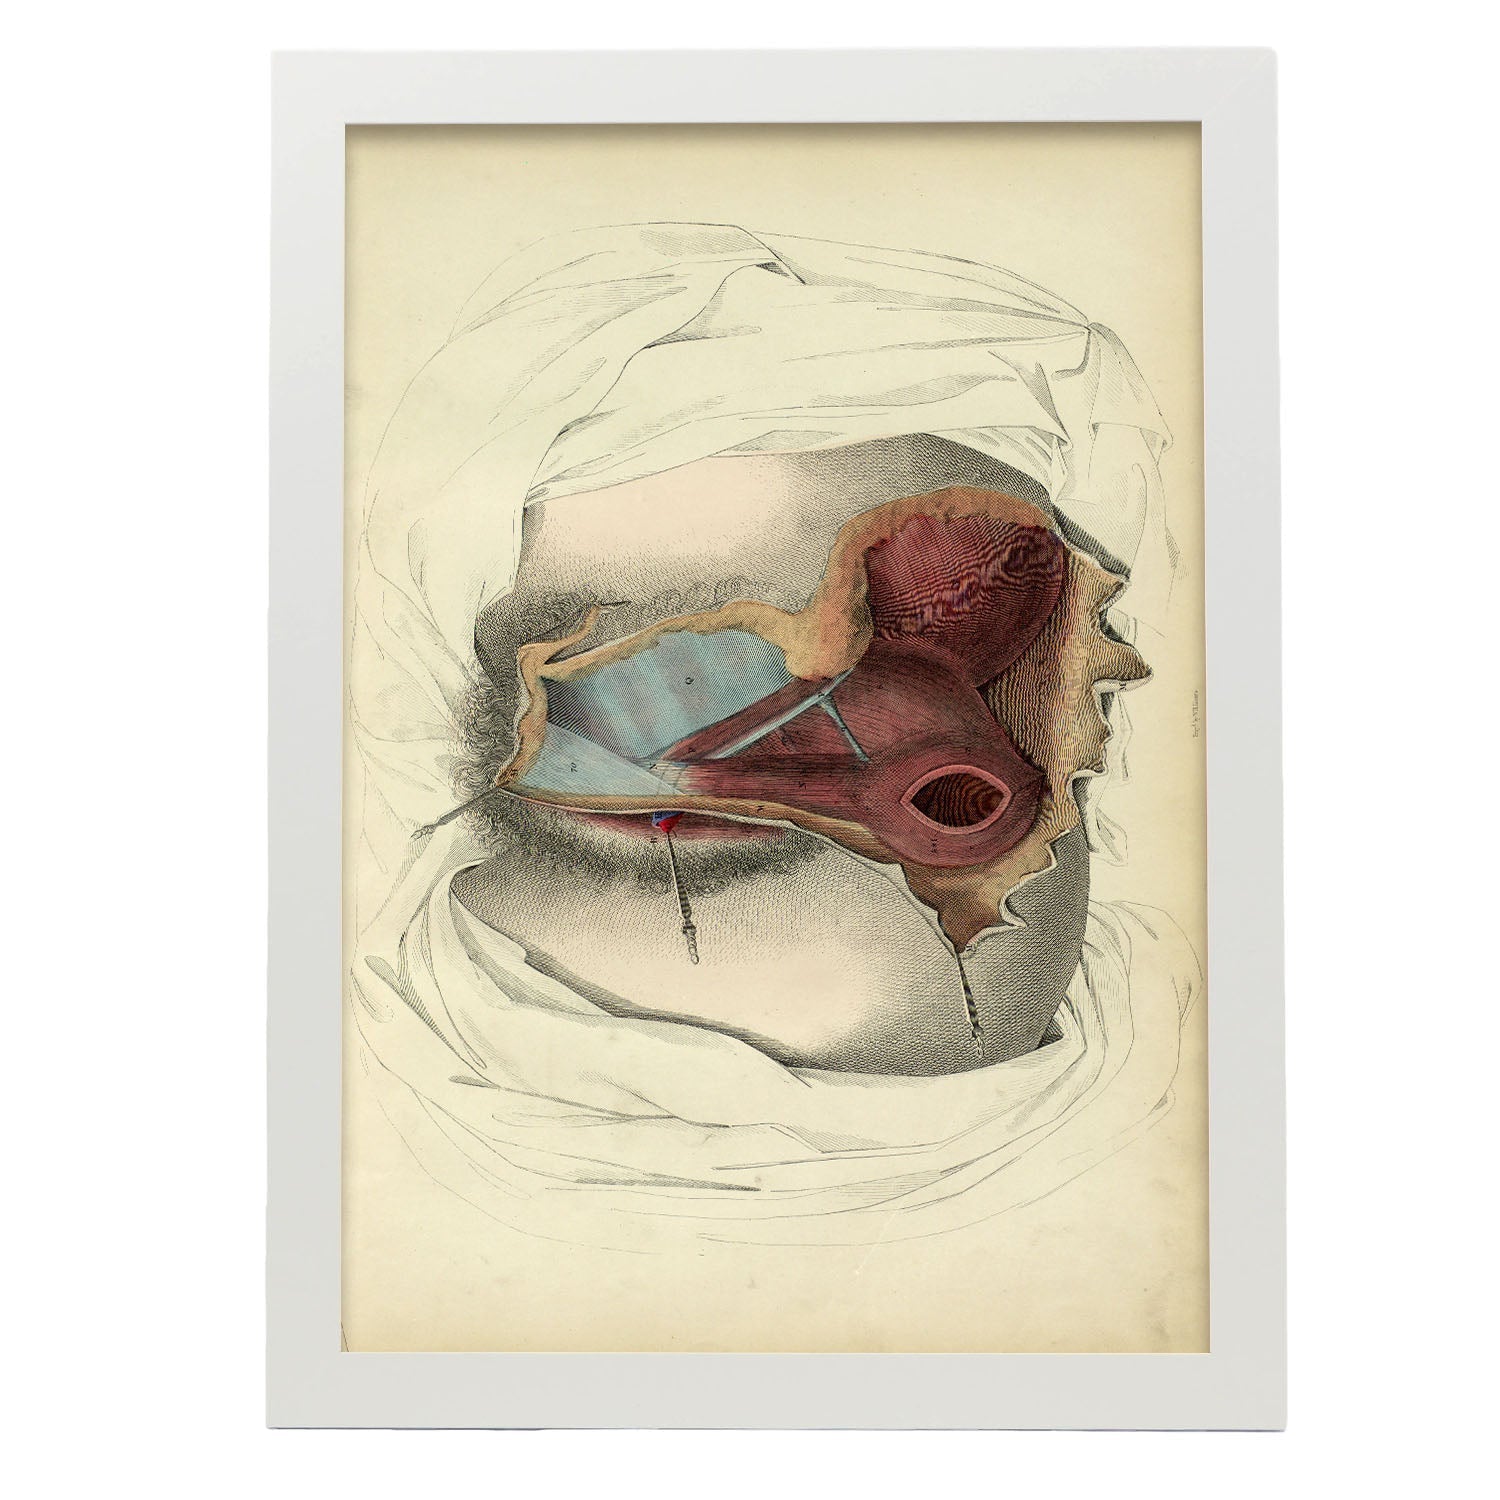 Dissection of the perineum, female-Artwork-Nacnic-A3-Marco Blanco-Nacnic Estudio SL